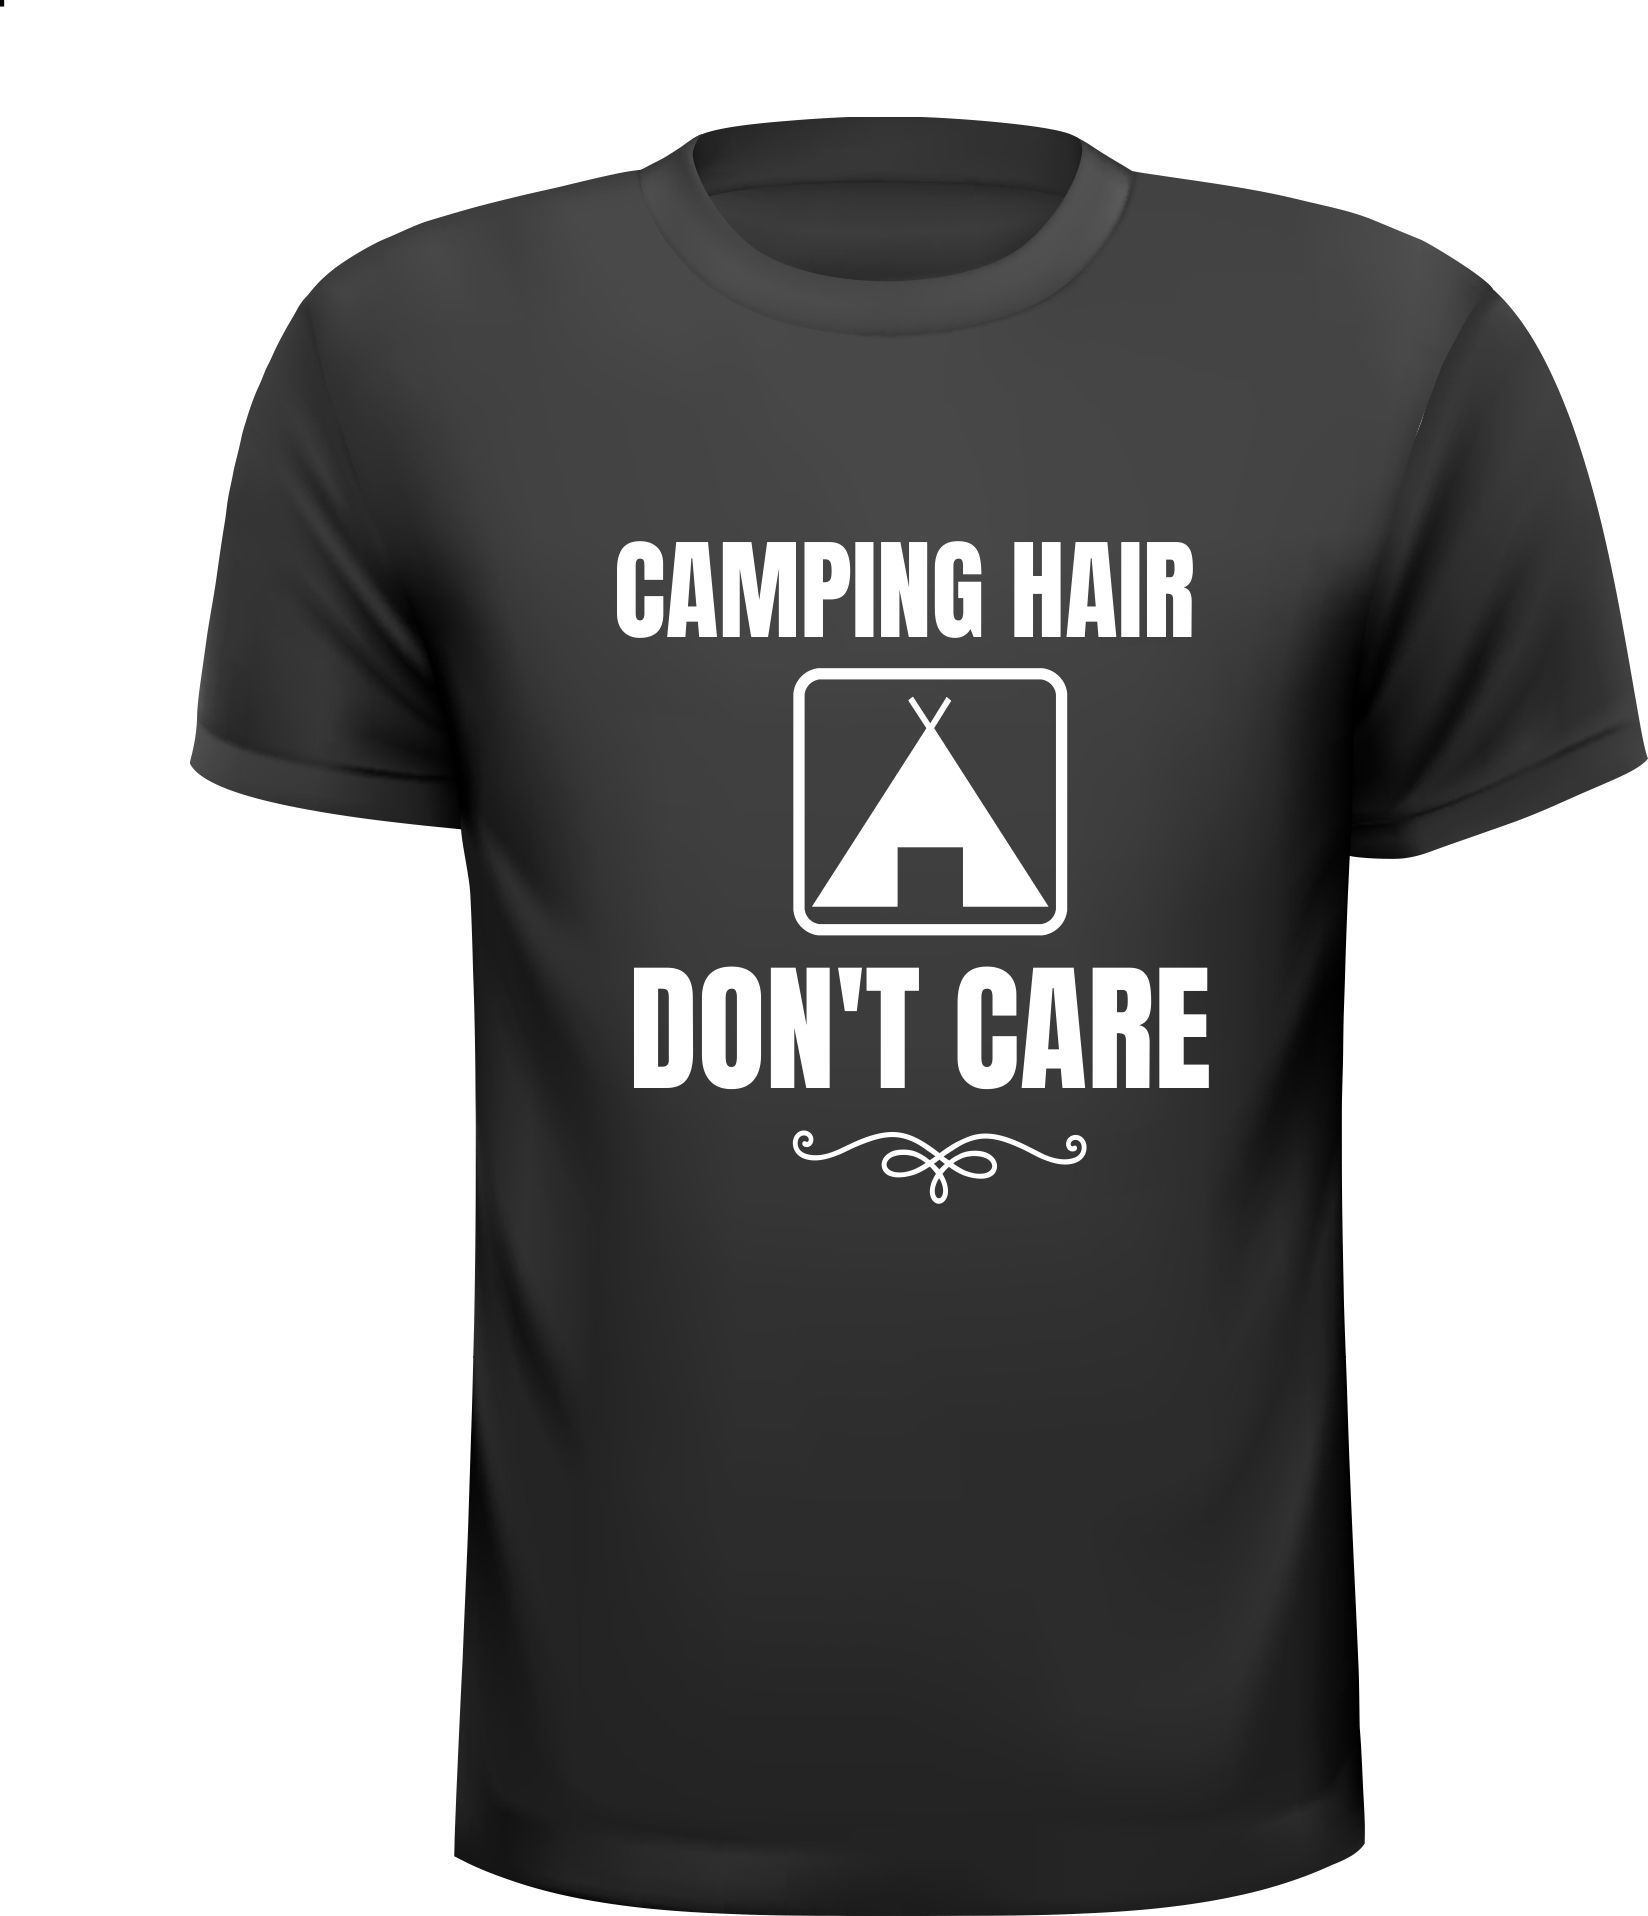 Camping hair don't care shirt